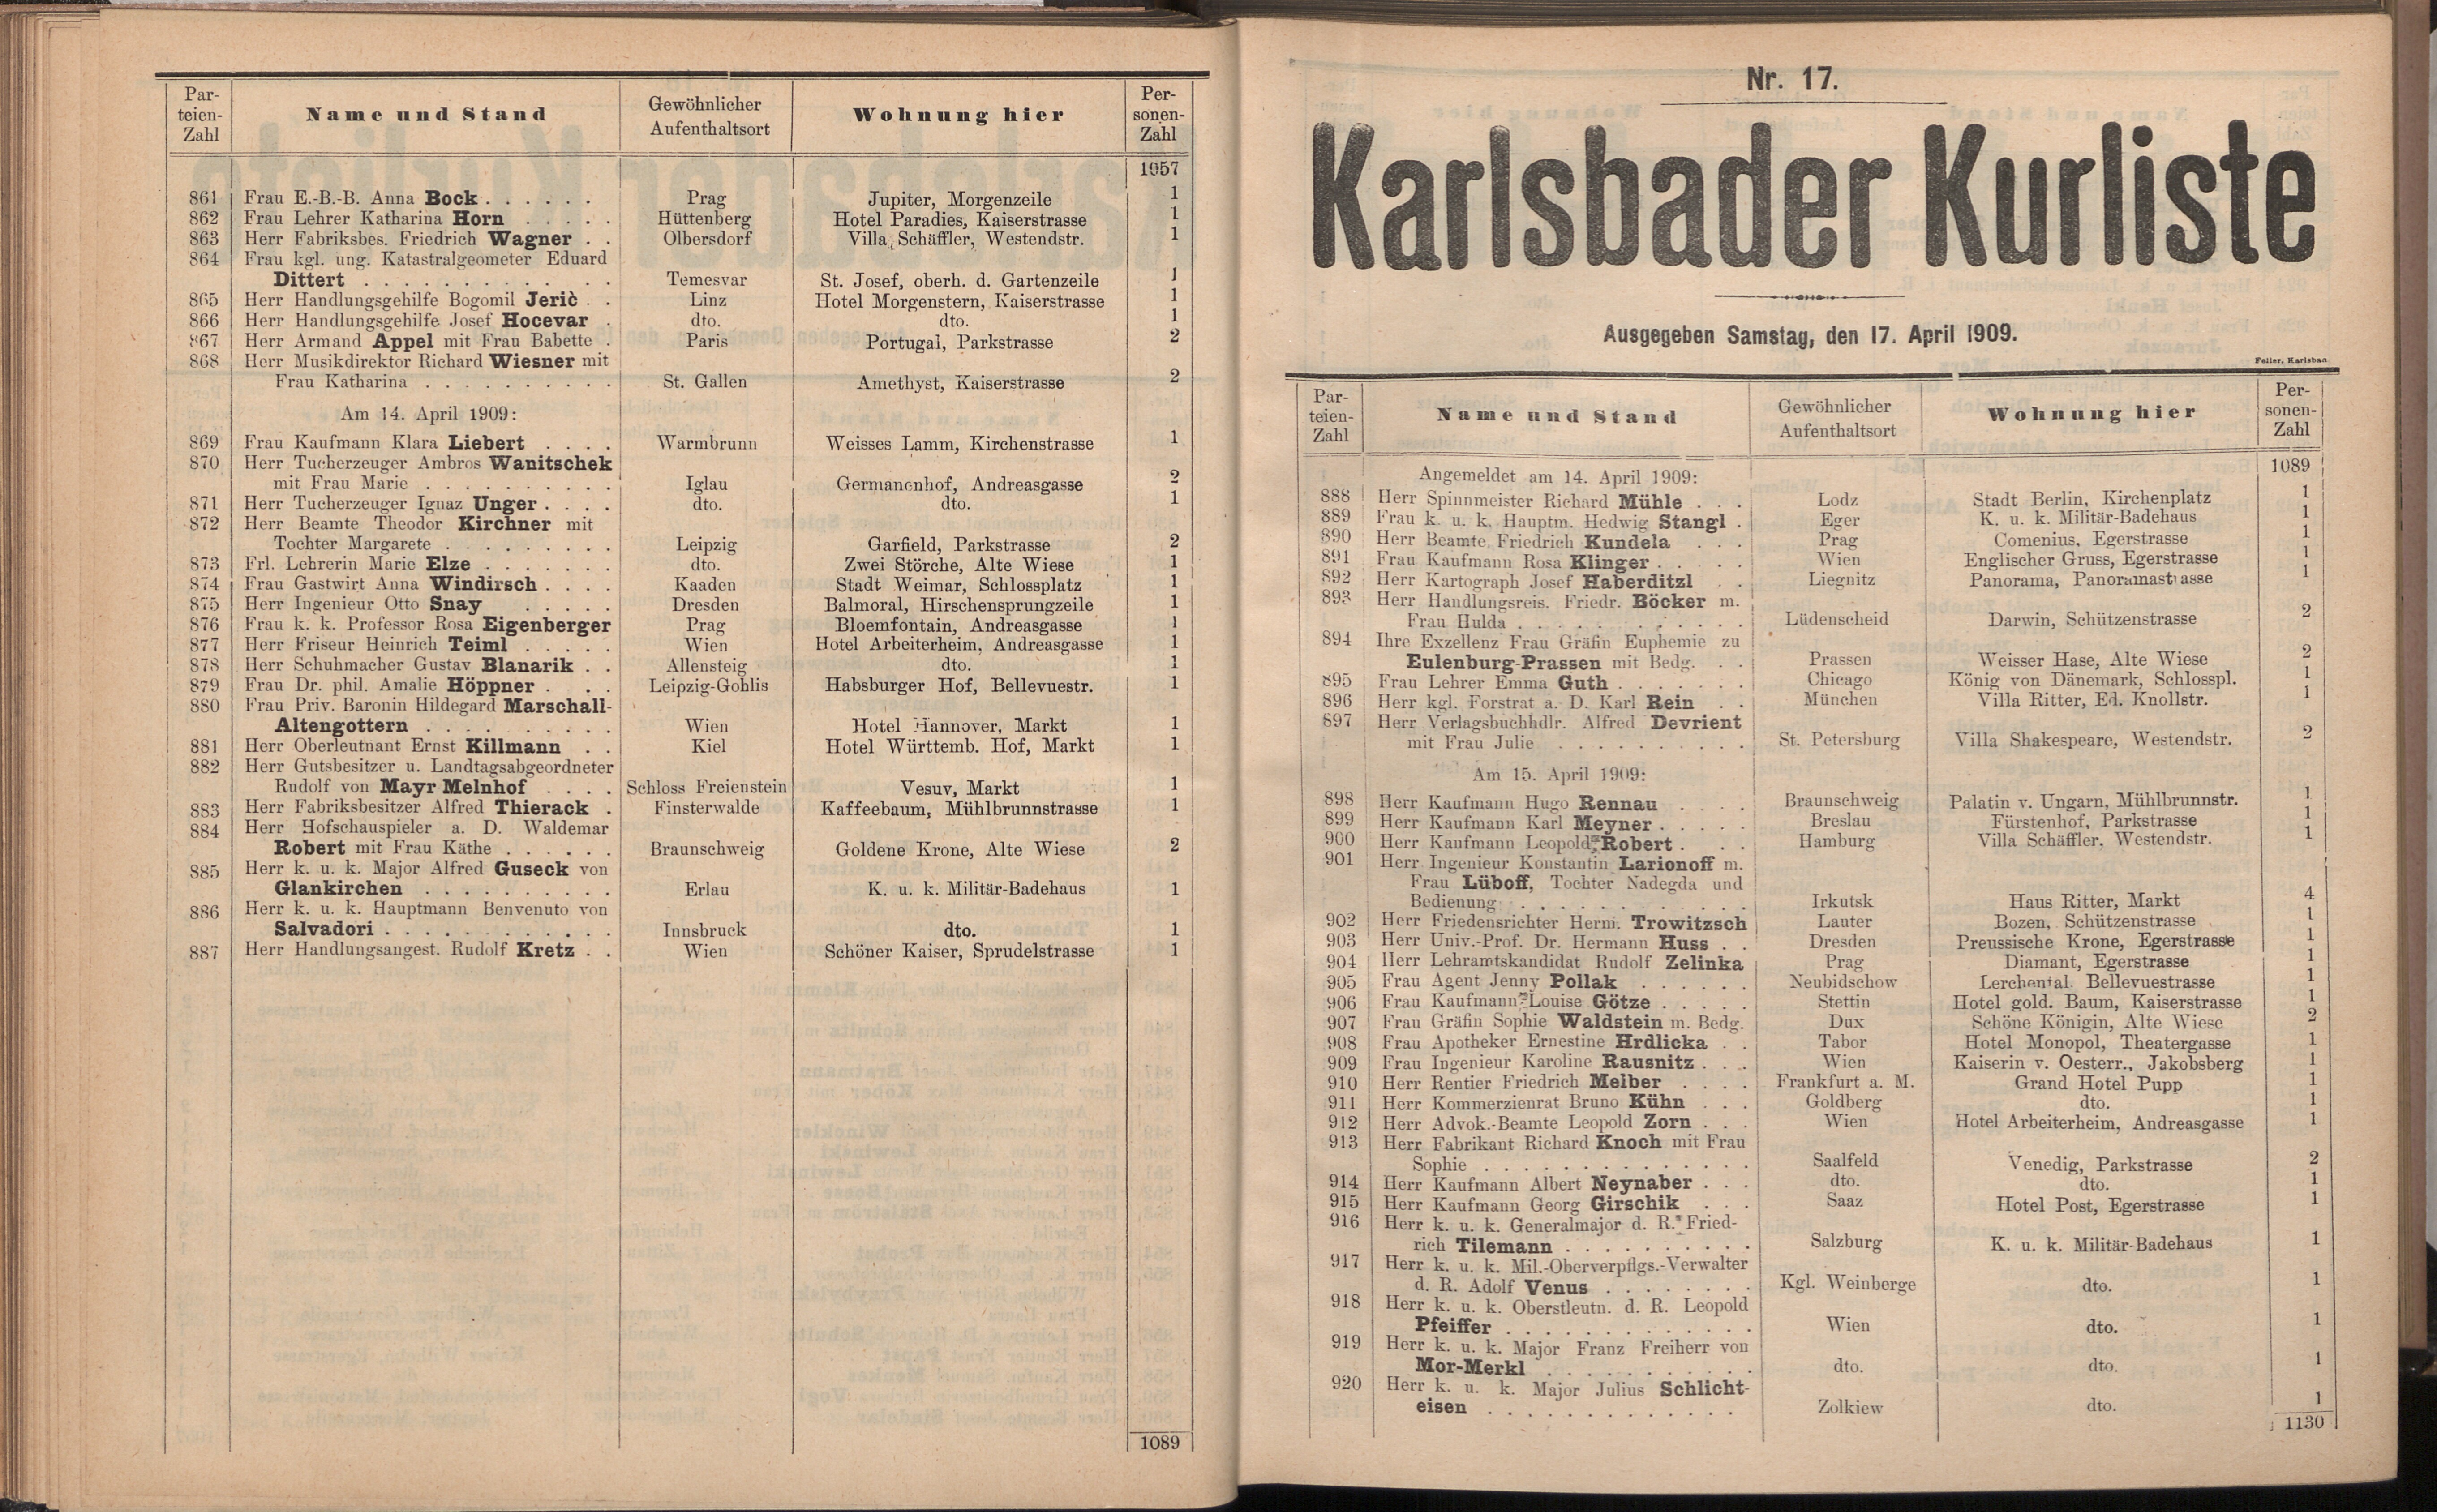 133. soap-kv_knihovna_karlsbader-kurliste-1909_1330